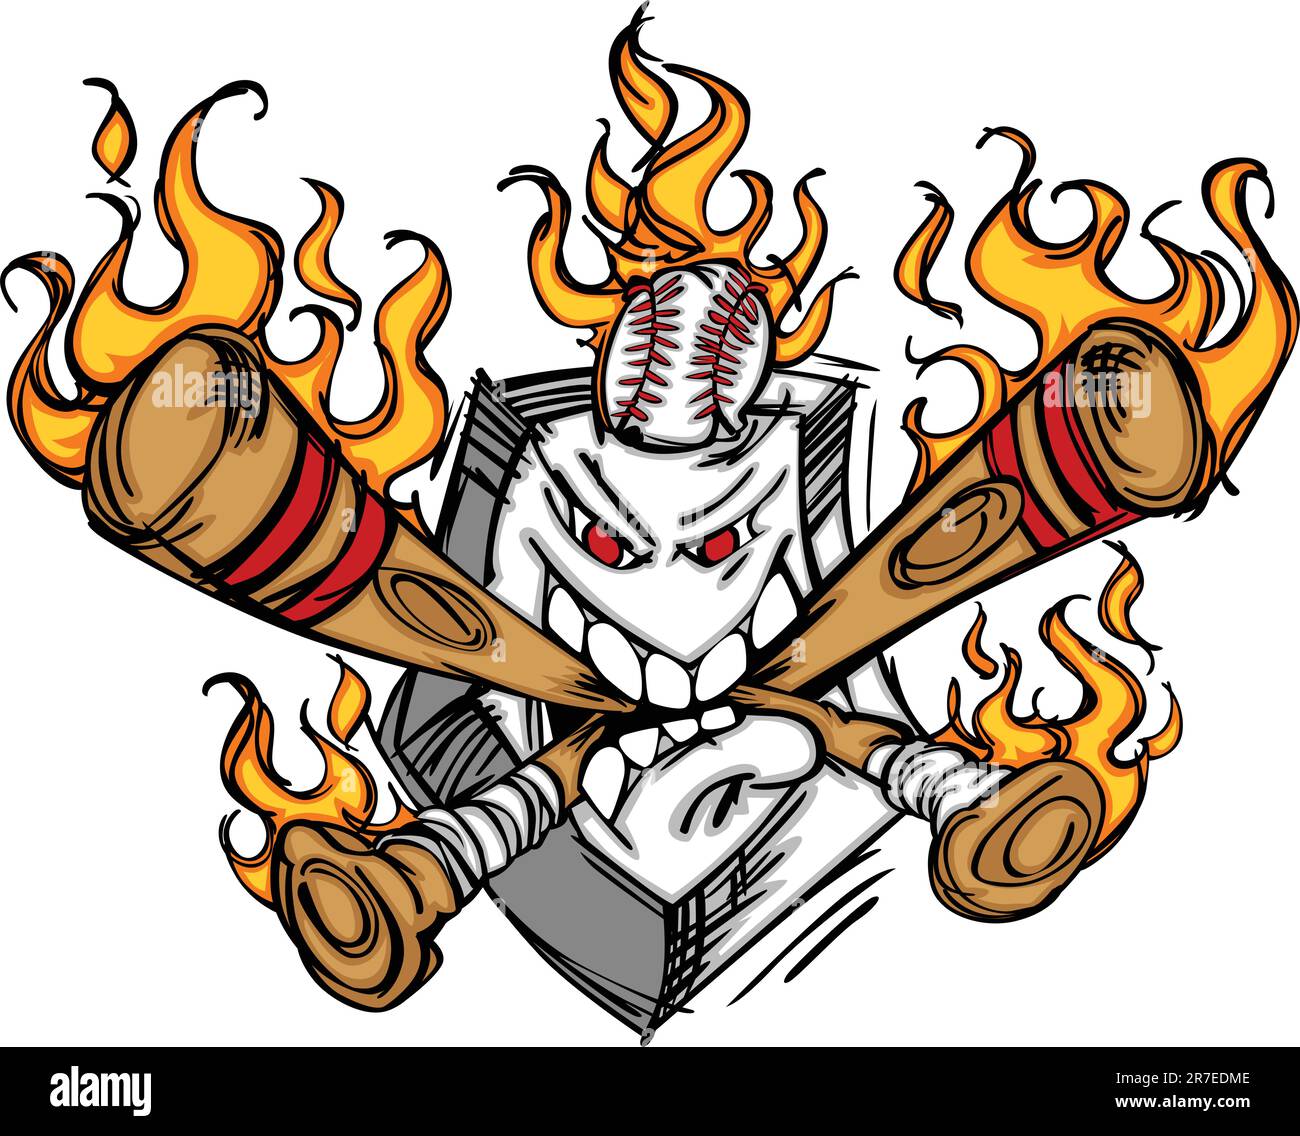 Cartoon Image of Flaming Baseball Bats and Home Plate with Baseball Stock Vector